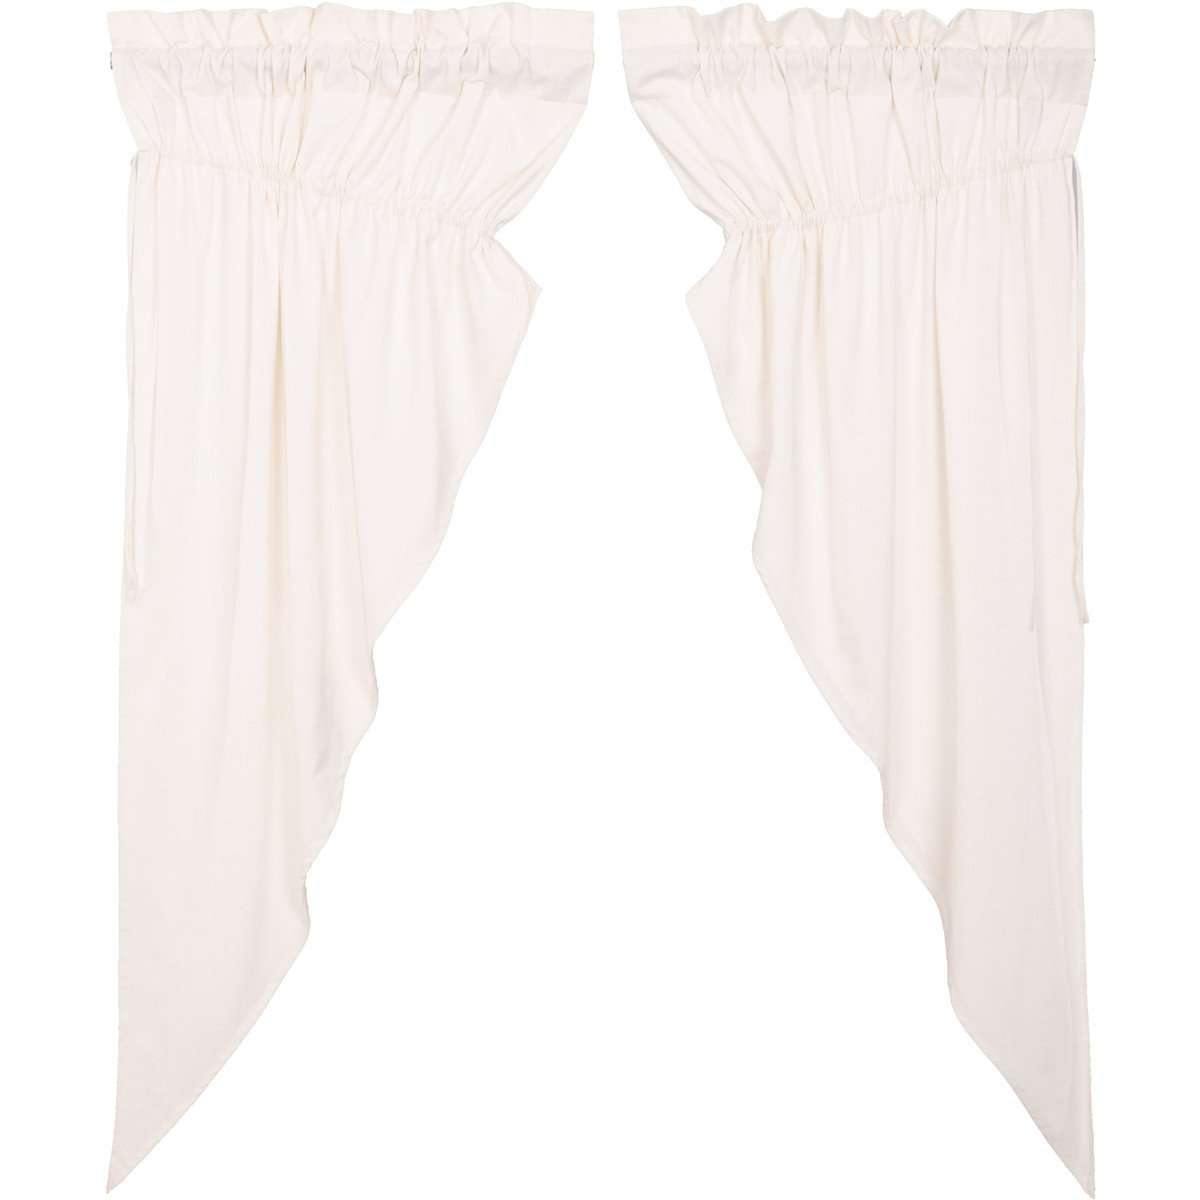 Simple Life Flax Antique White Prairie Short Panel Curtain Set of 2 63x36x18 VHC Brands - The Fox Decor